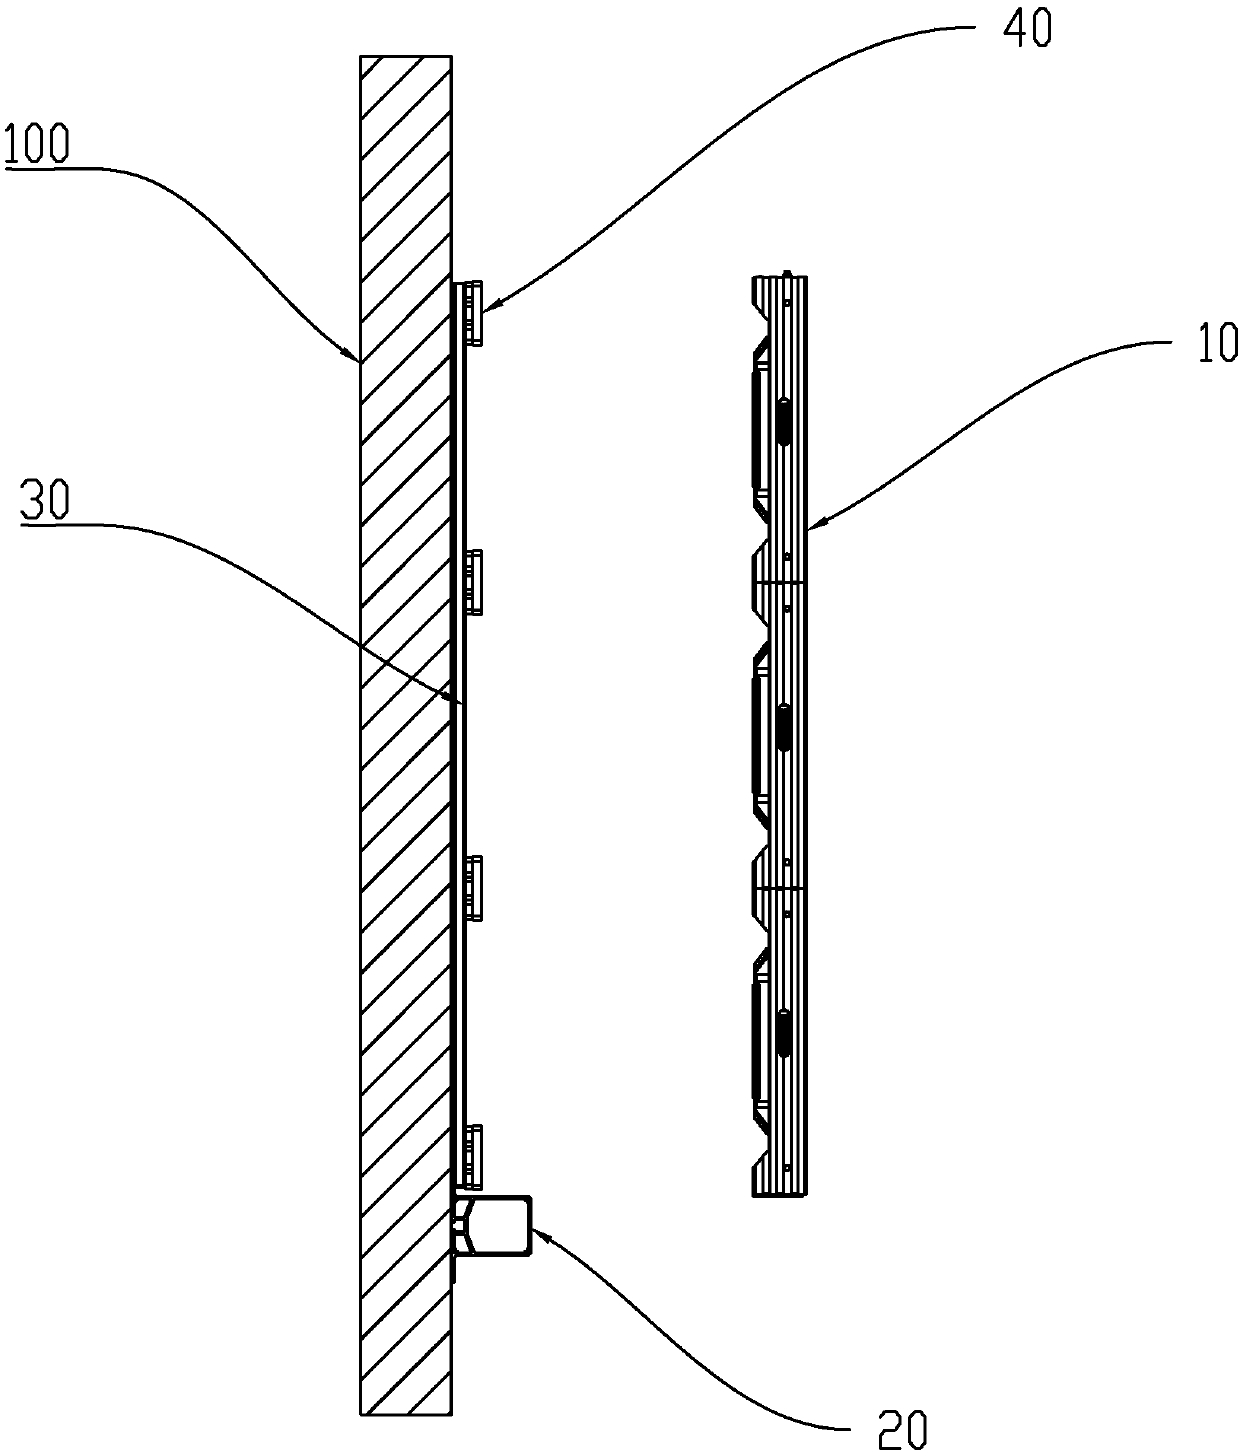 Three-dimensional adjustable wall-adhering mounting mechanism